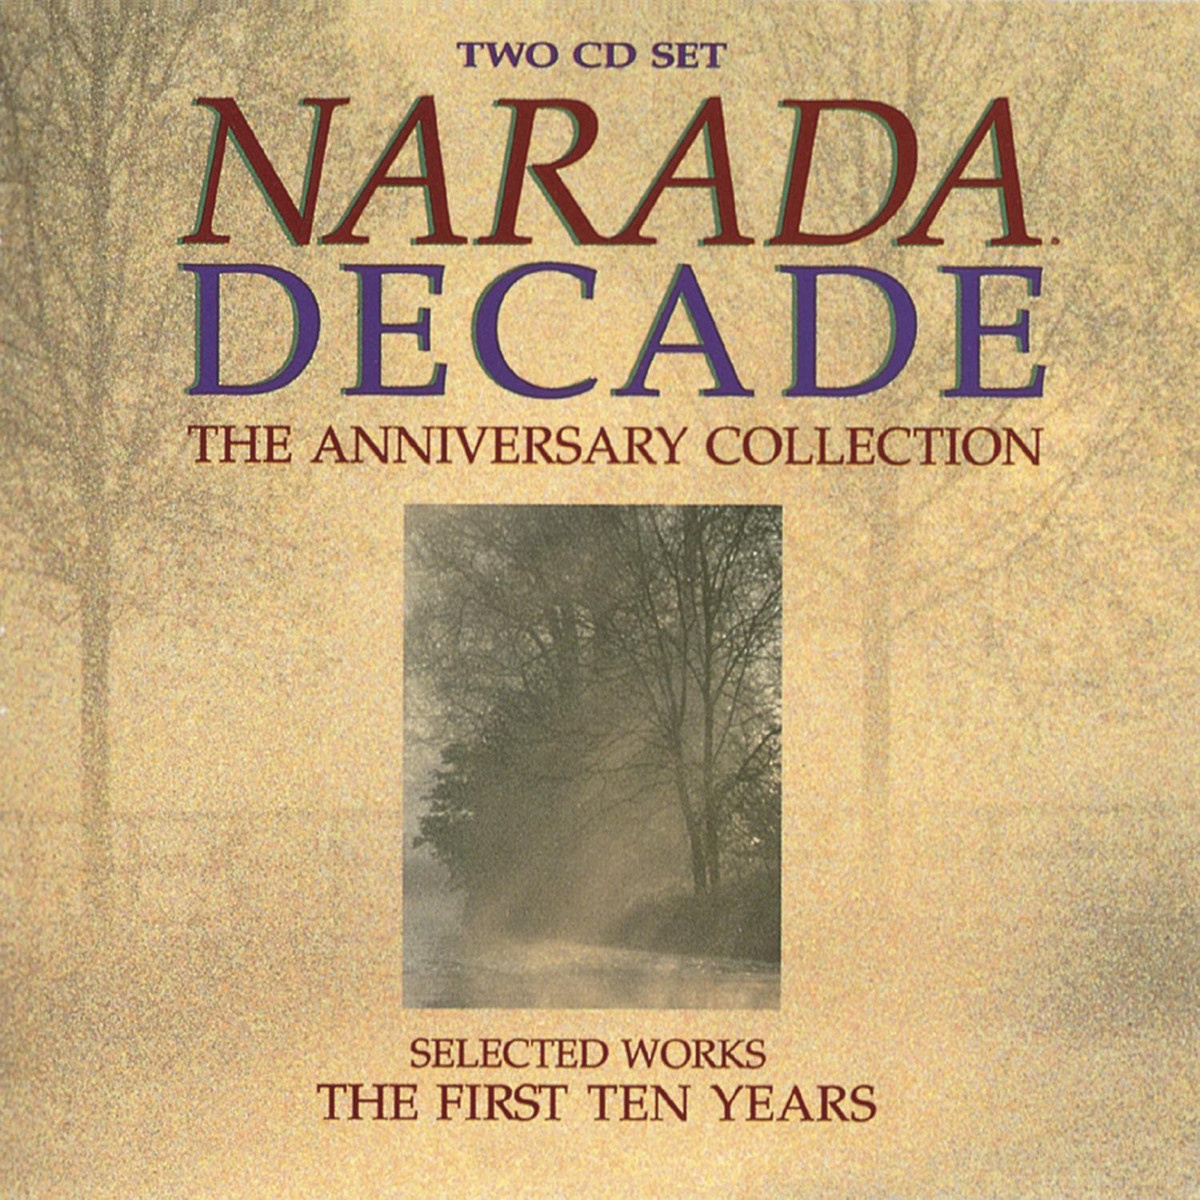 Narada Decade (The Anniversary Collection)